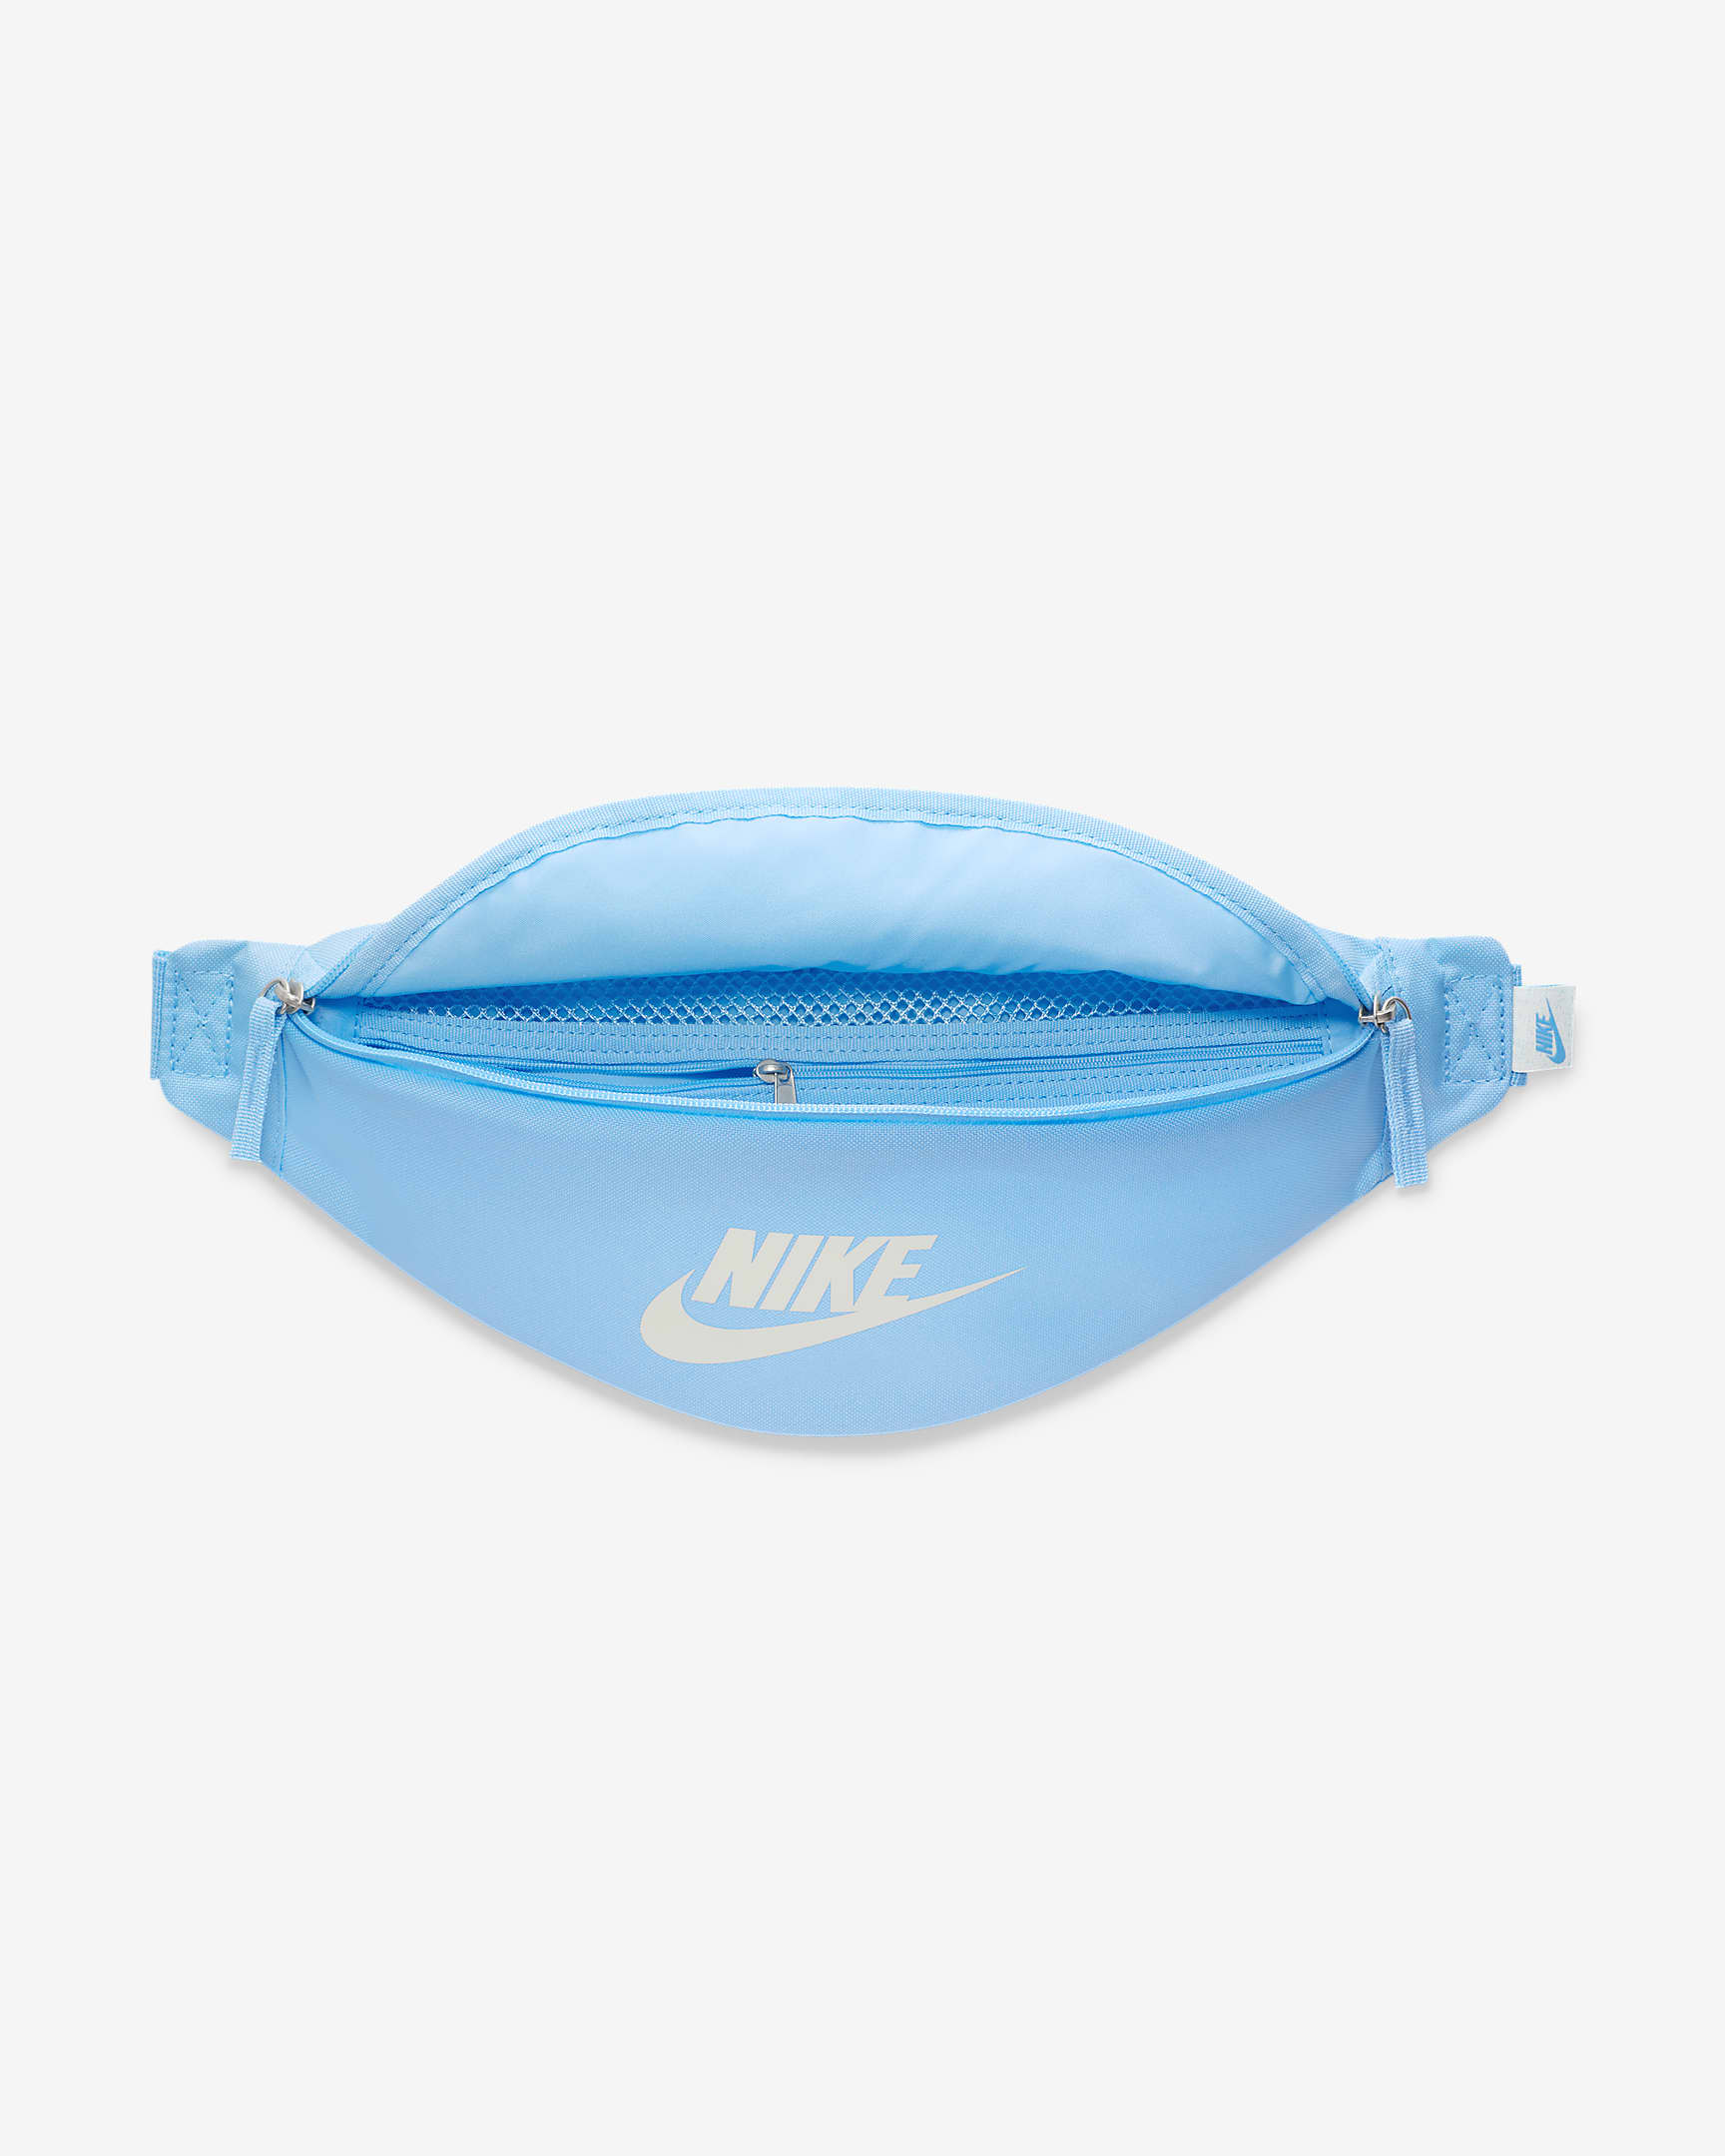 Nike Heritage Waistpack (3L) - Aquarius Blue/Aquarius Blue/Sail